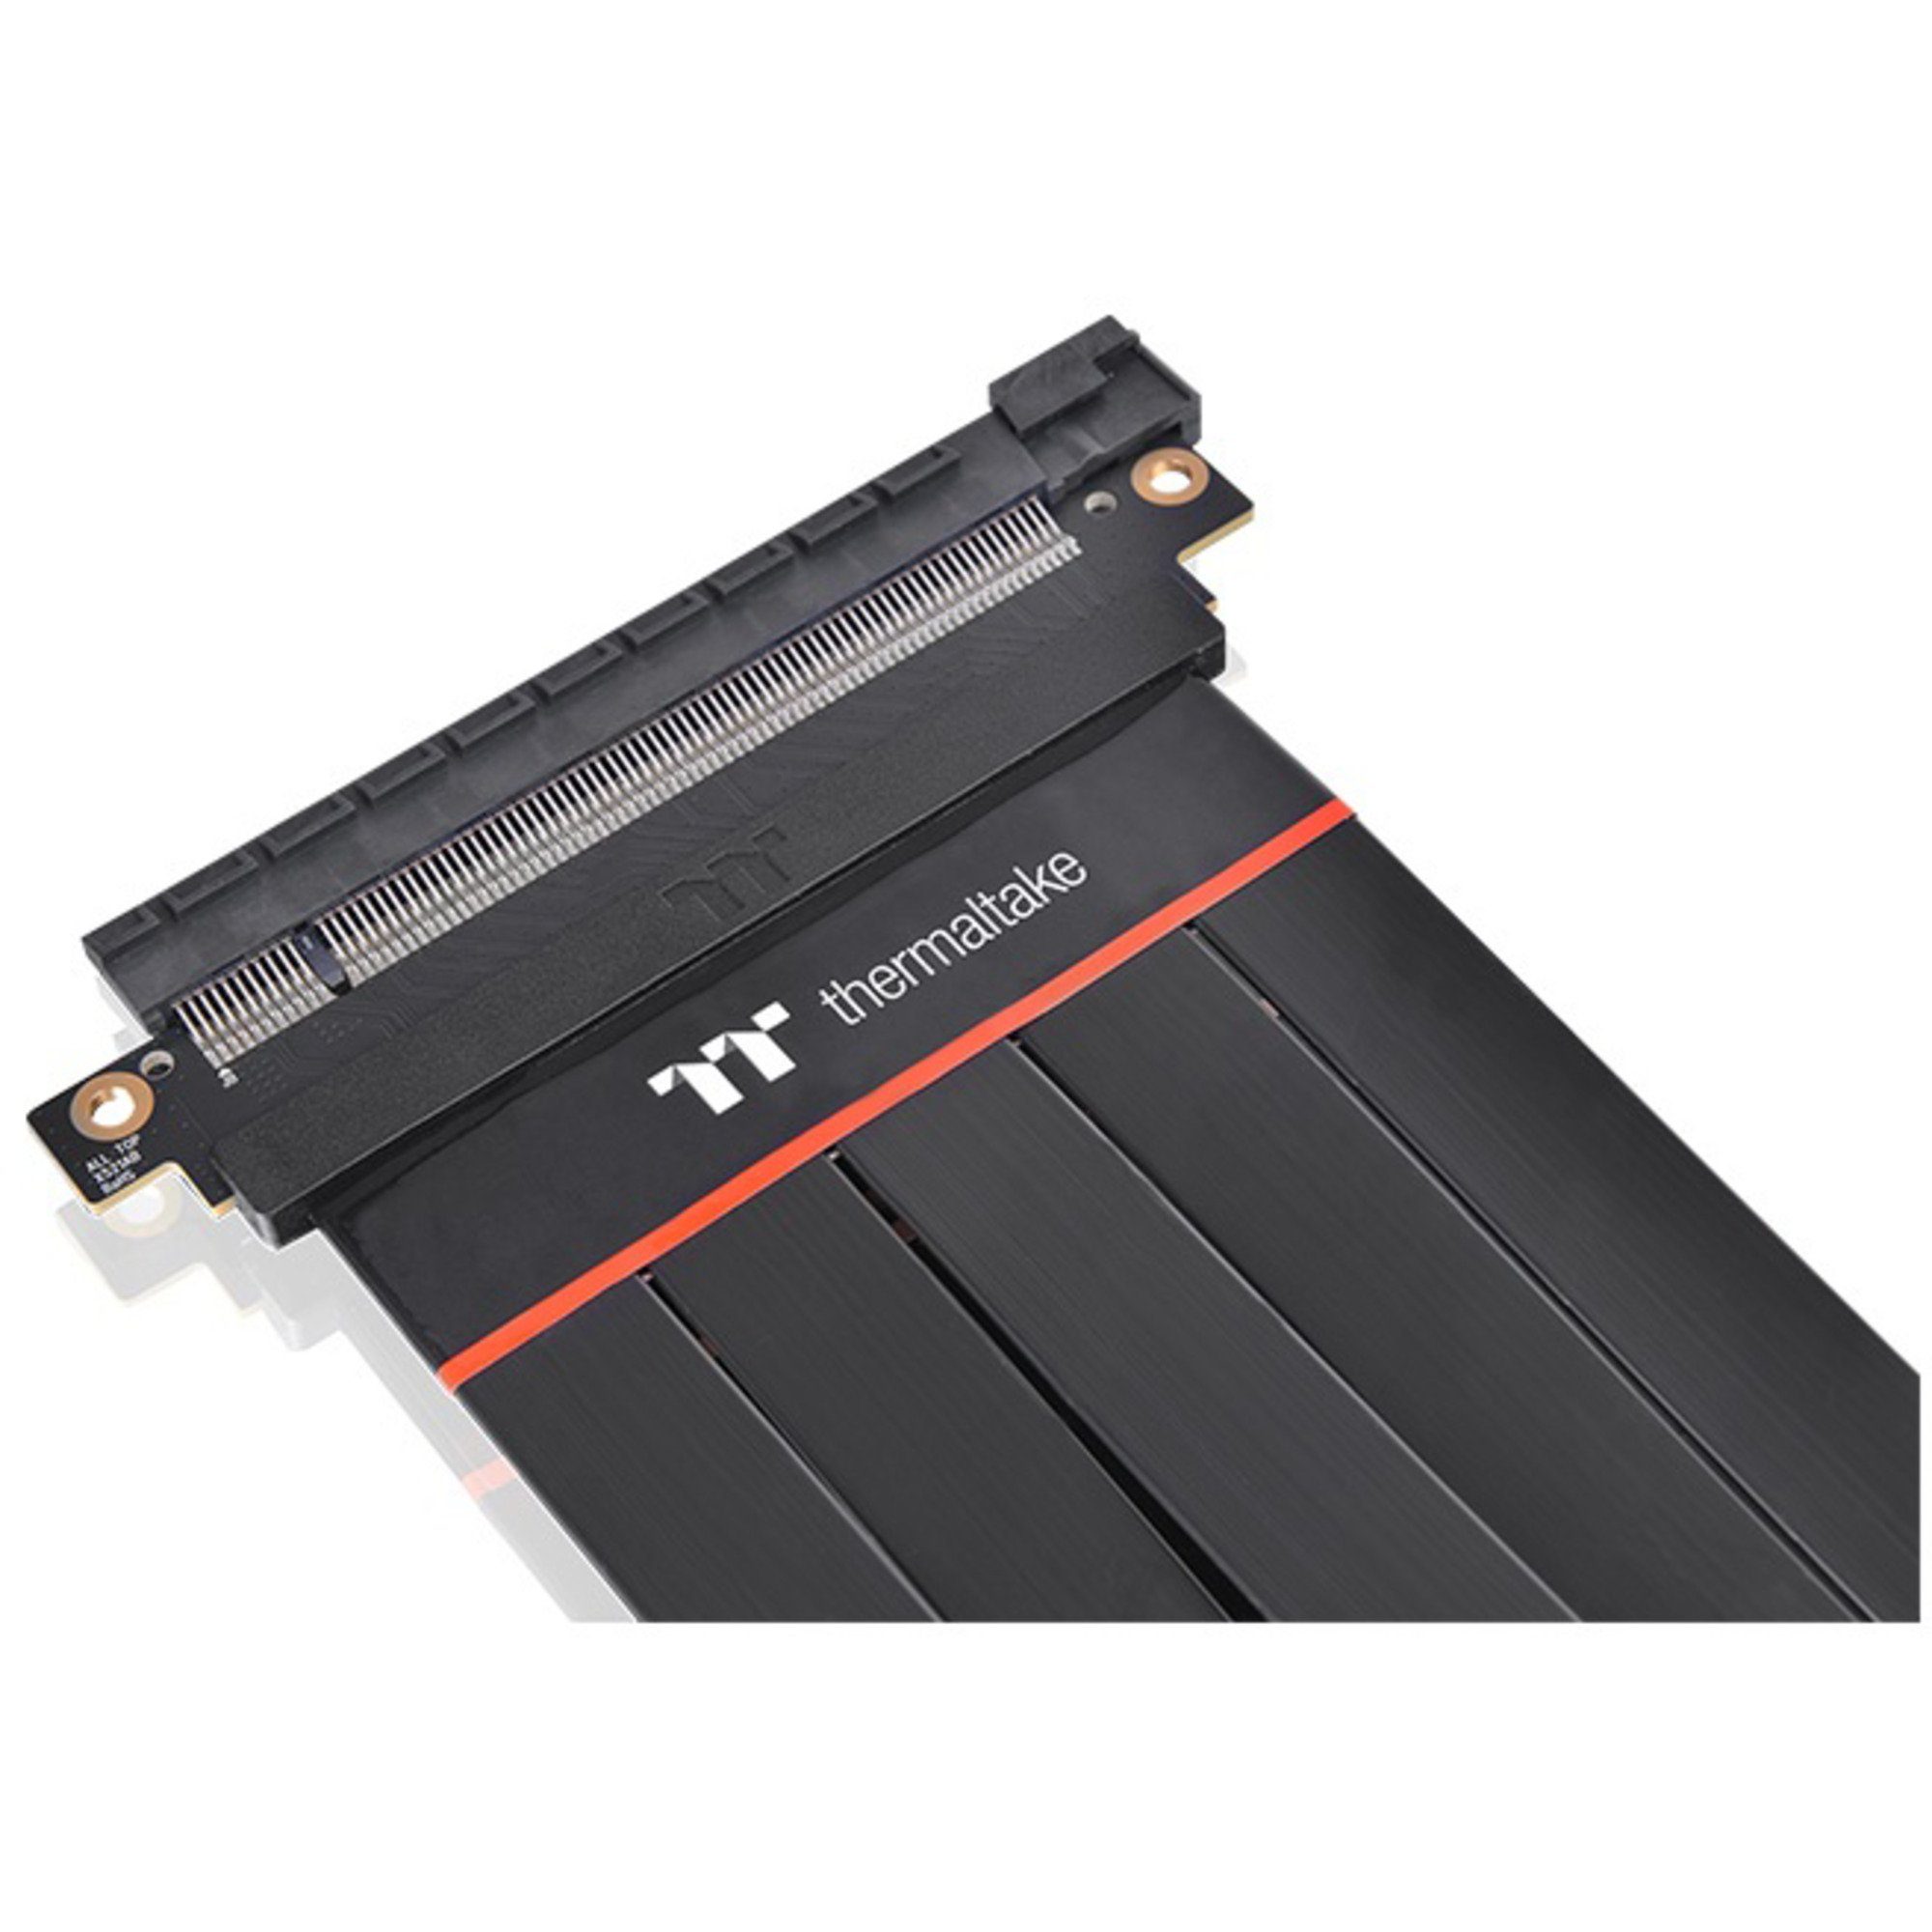 Thermaltake PCIe 16x 4.0 Verlängerungskabel Thermaltake 30cm, Extender Kabel